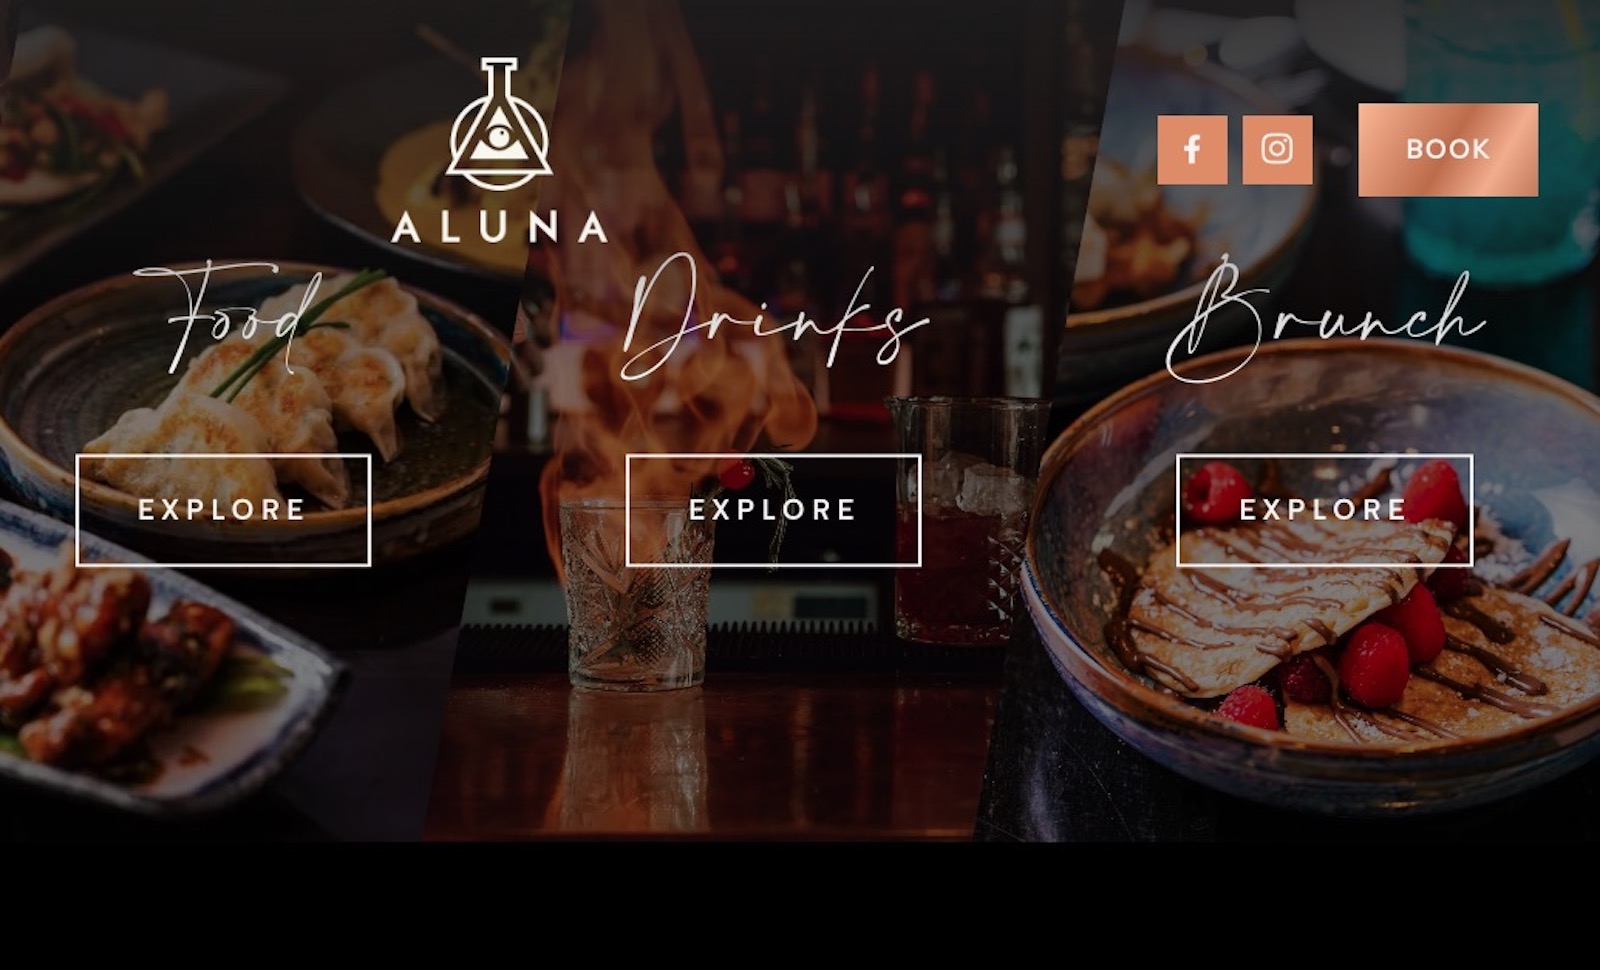 Aluna Cocktail Bar and Restaurant